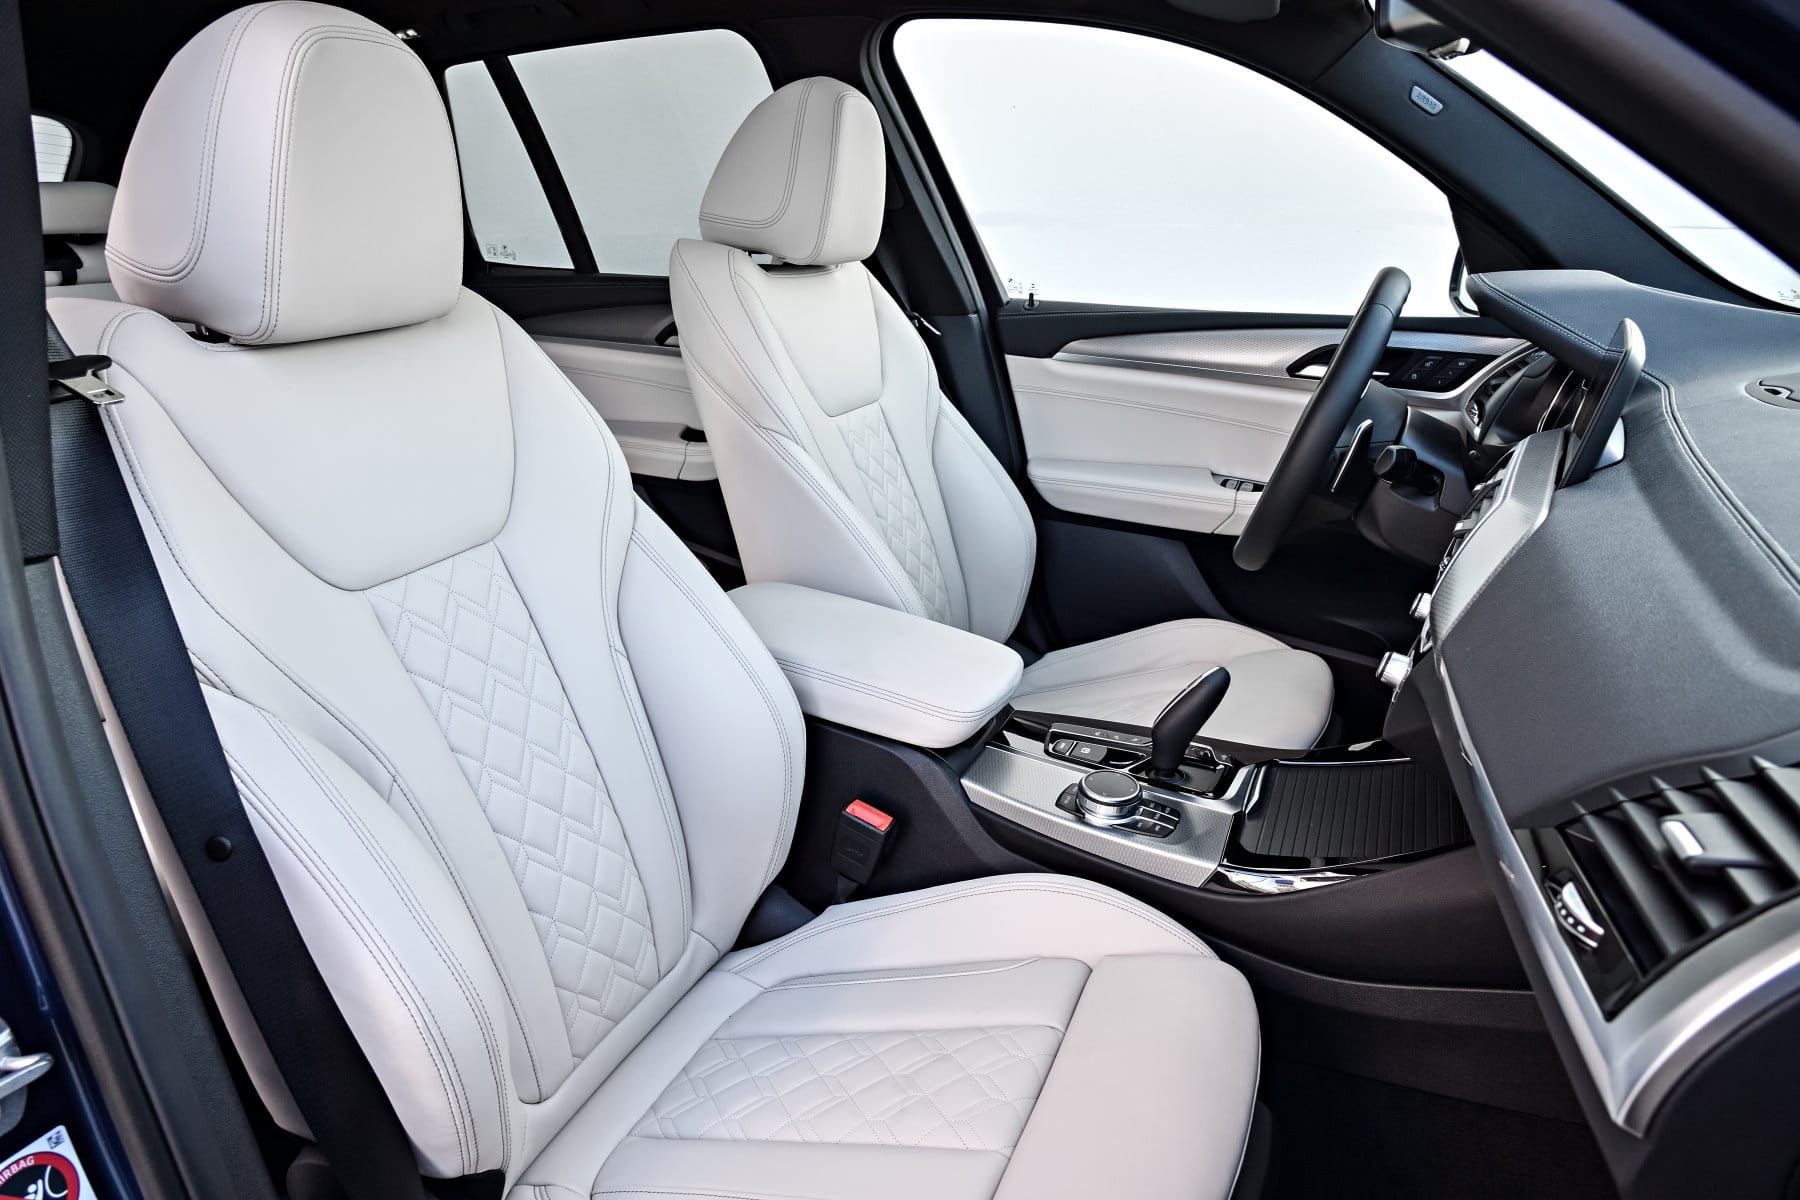 Falls es im BMW X3 mal müffeln sollte, kann man den Innenraum nun auch elektronisch beduften.